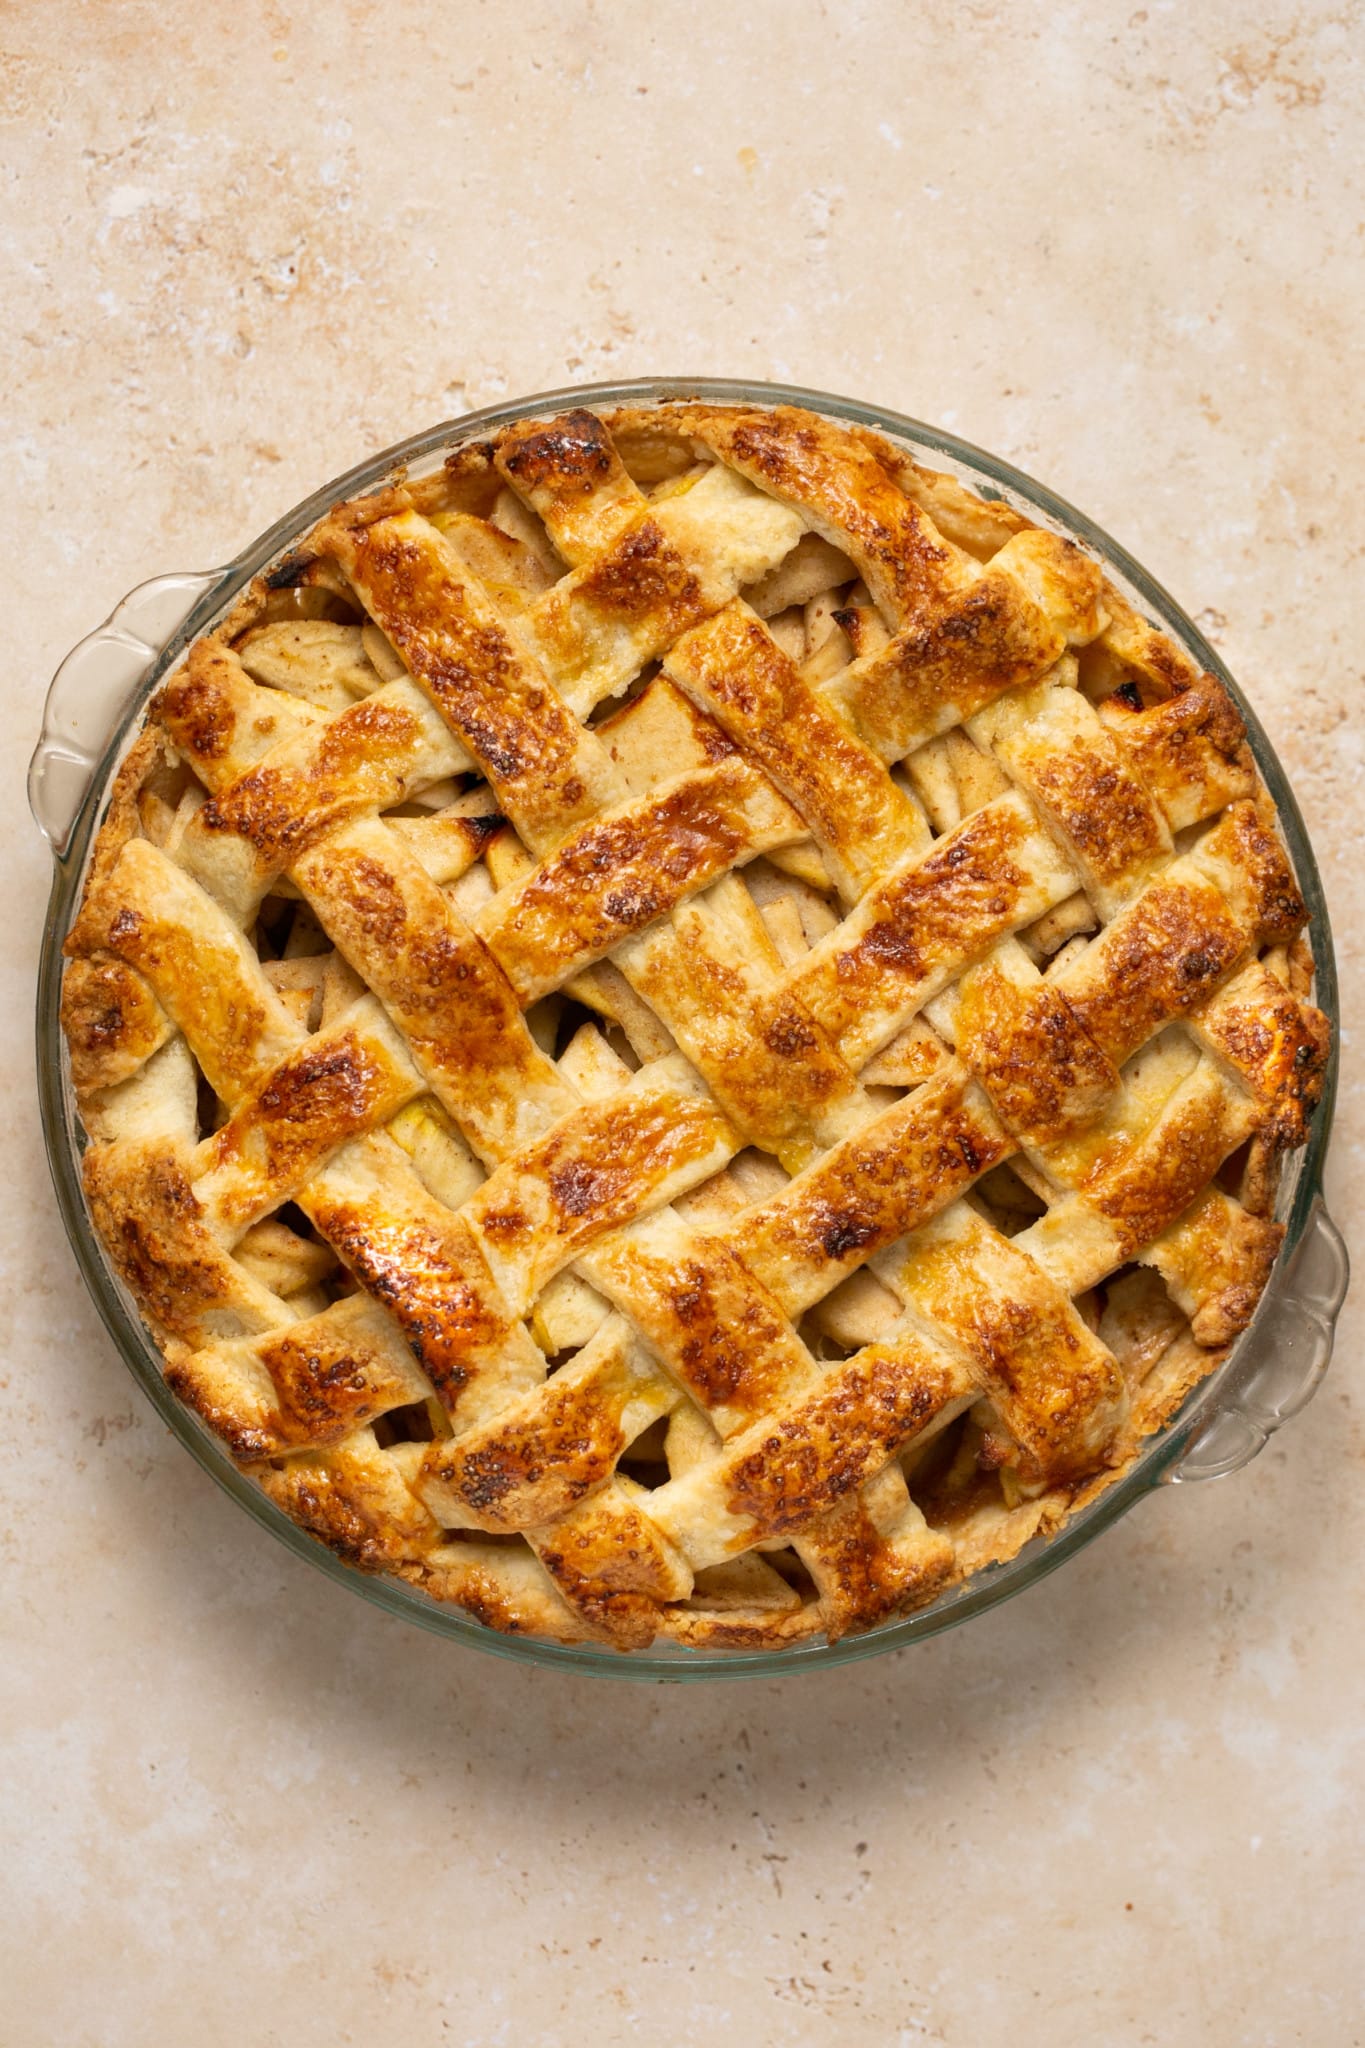 a baked apple pie with lattice crust. 